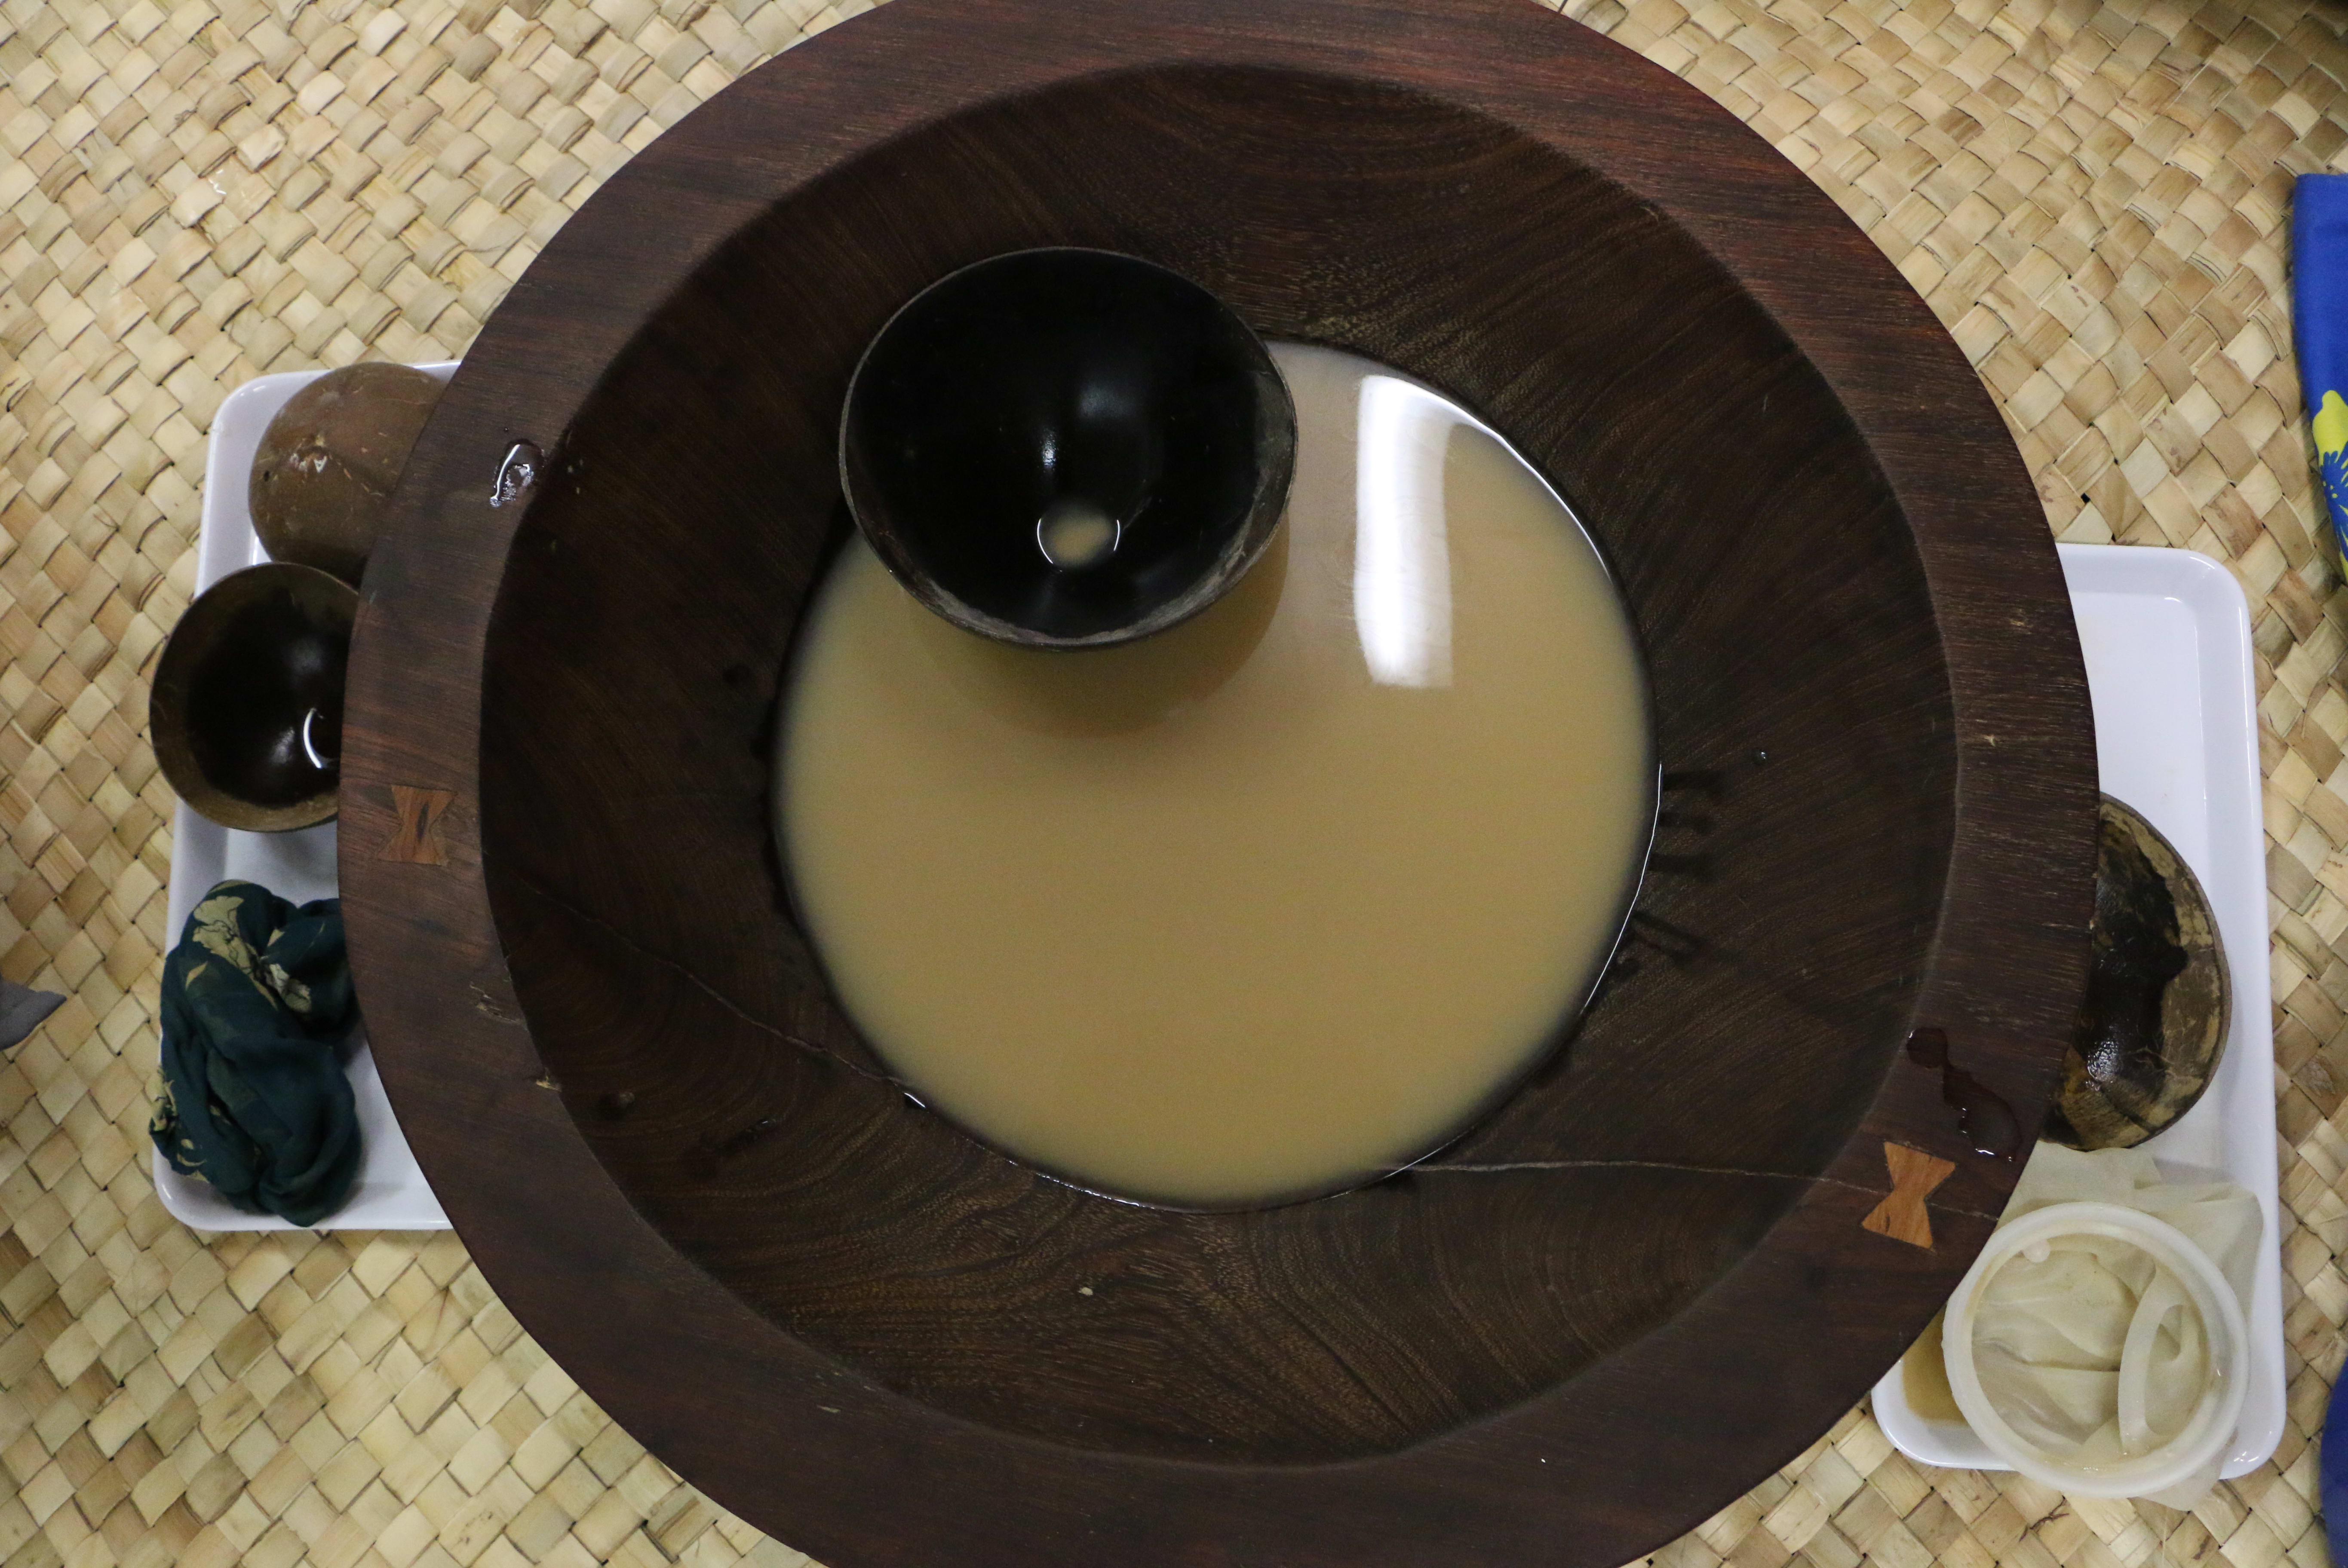 Fijians urged not to share the kava bowl | RNZ News